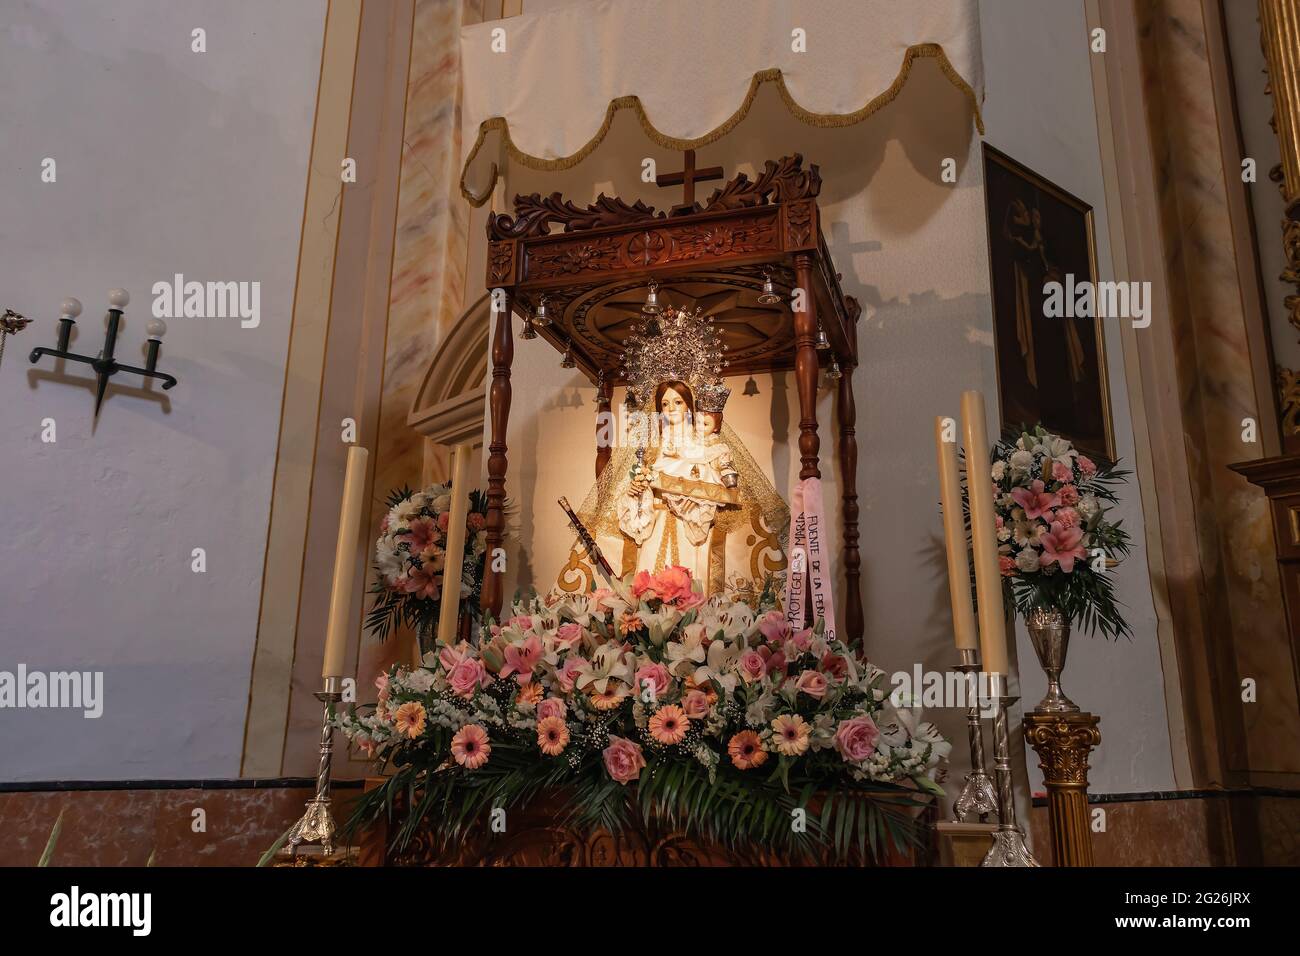 Cazorla, Jaen, Spain - May 18 , 2021:  Image of La Virgen de la Cabeza, patron saint of the city of Cazorla, inside the Parroquia de Santa Maria (Chur Stock Photo